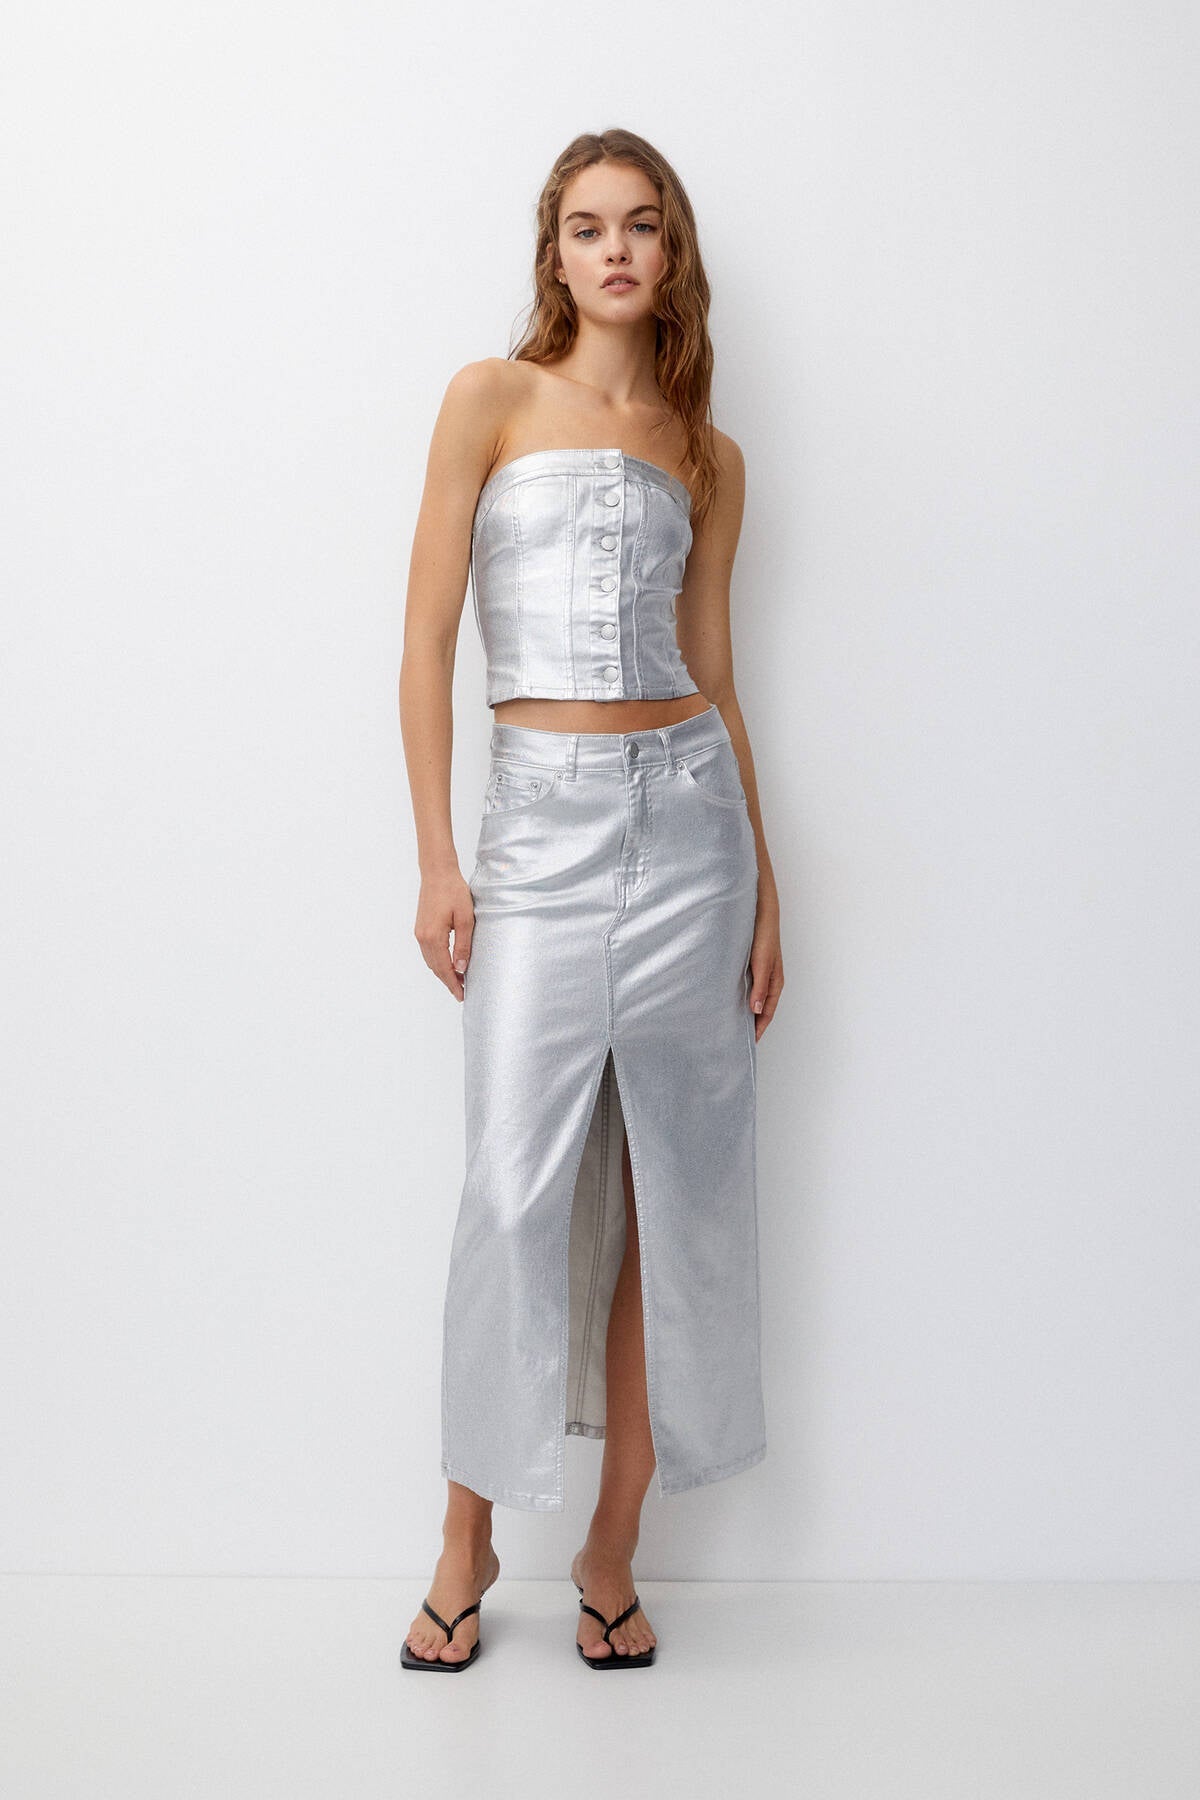 Long Metallic Denim Skirt with Long Slit - Silver - Bottom - LussoCA